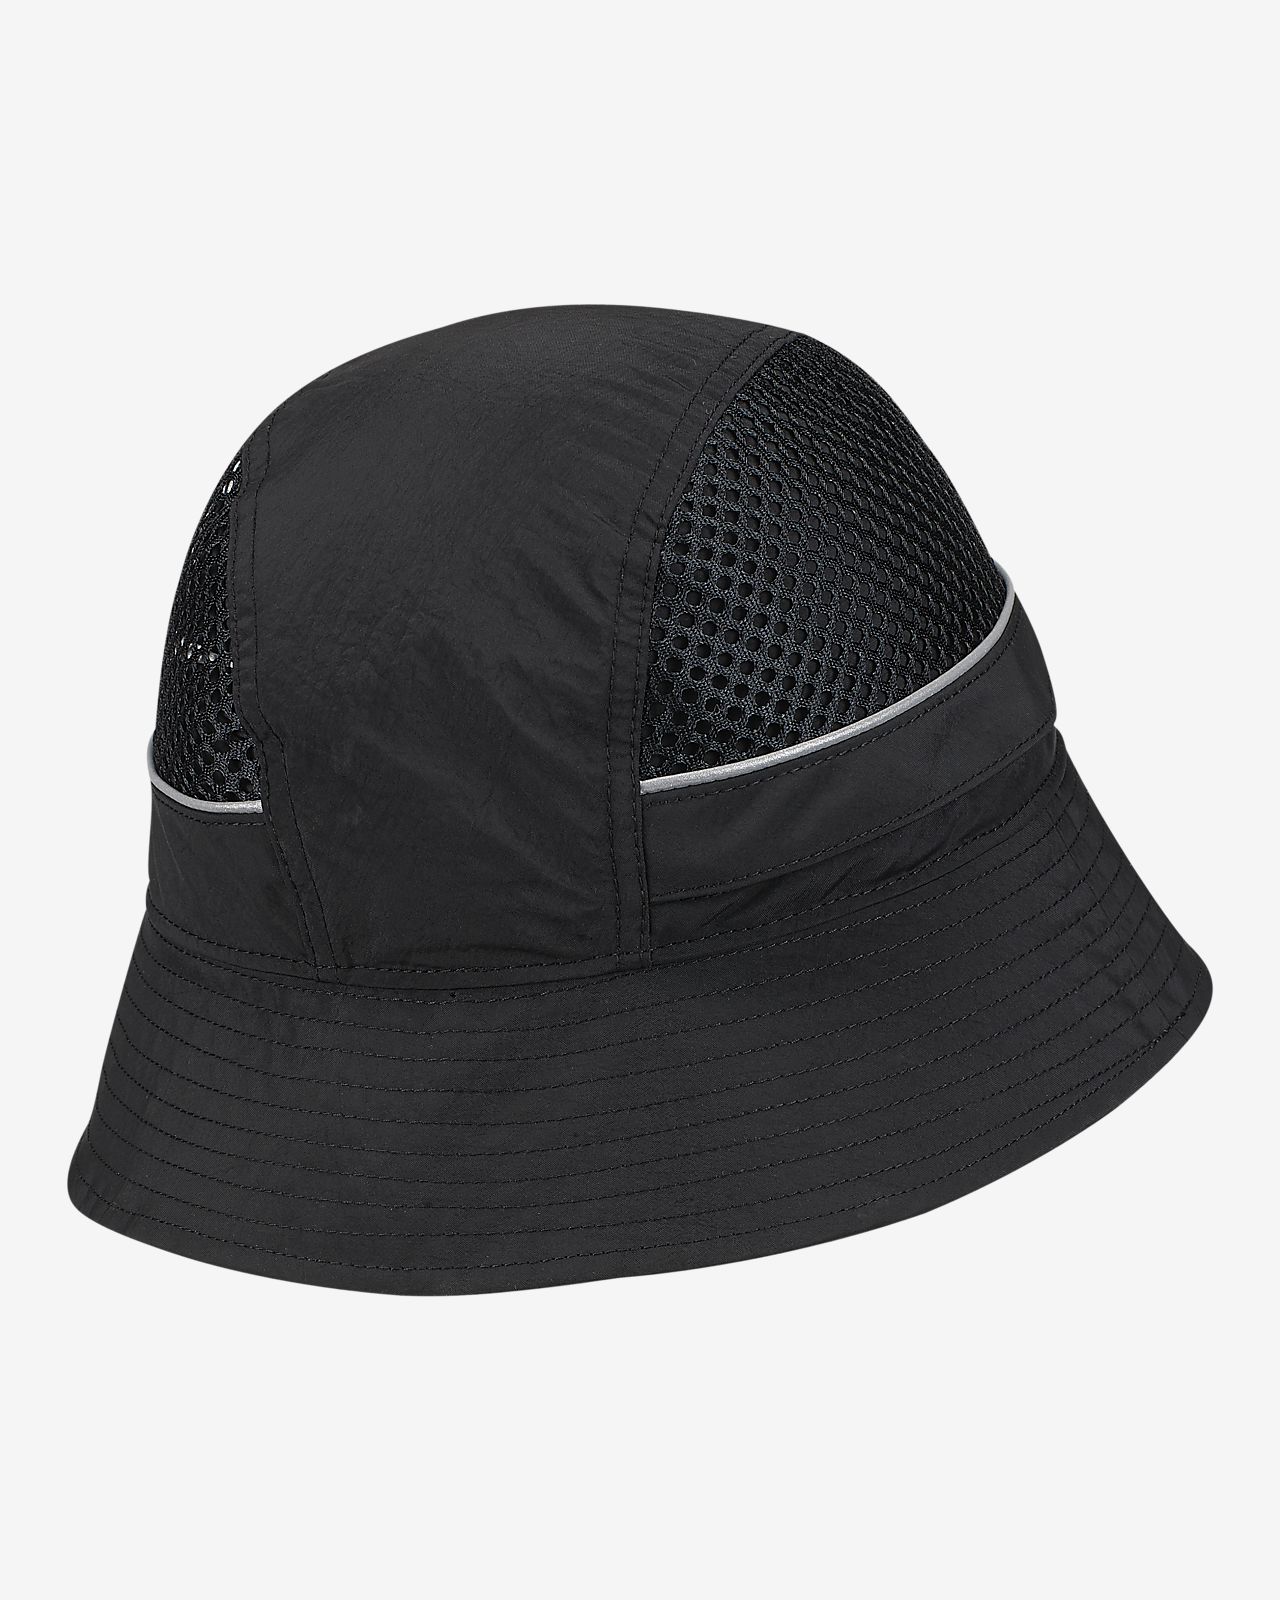 Nike Bucket Hat Size Chart